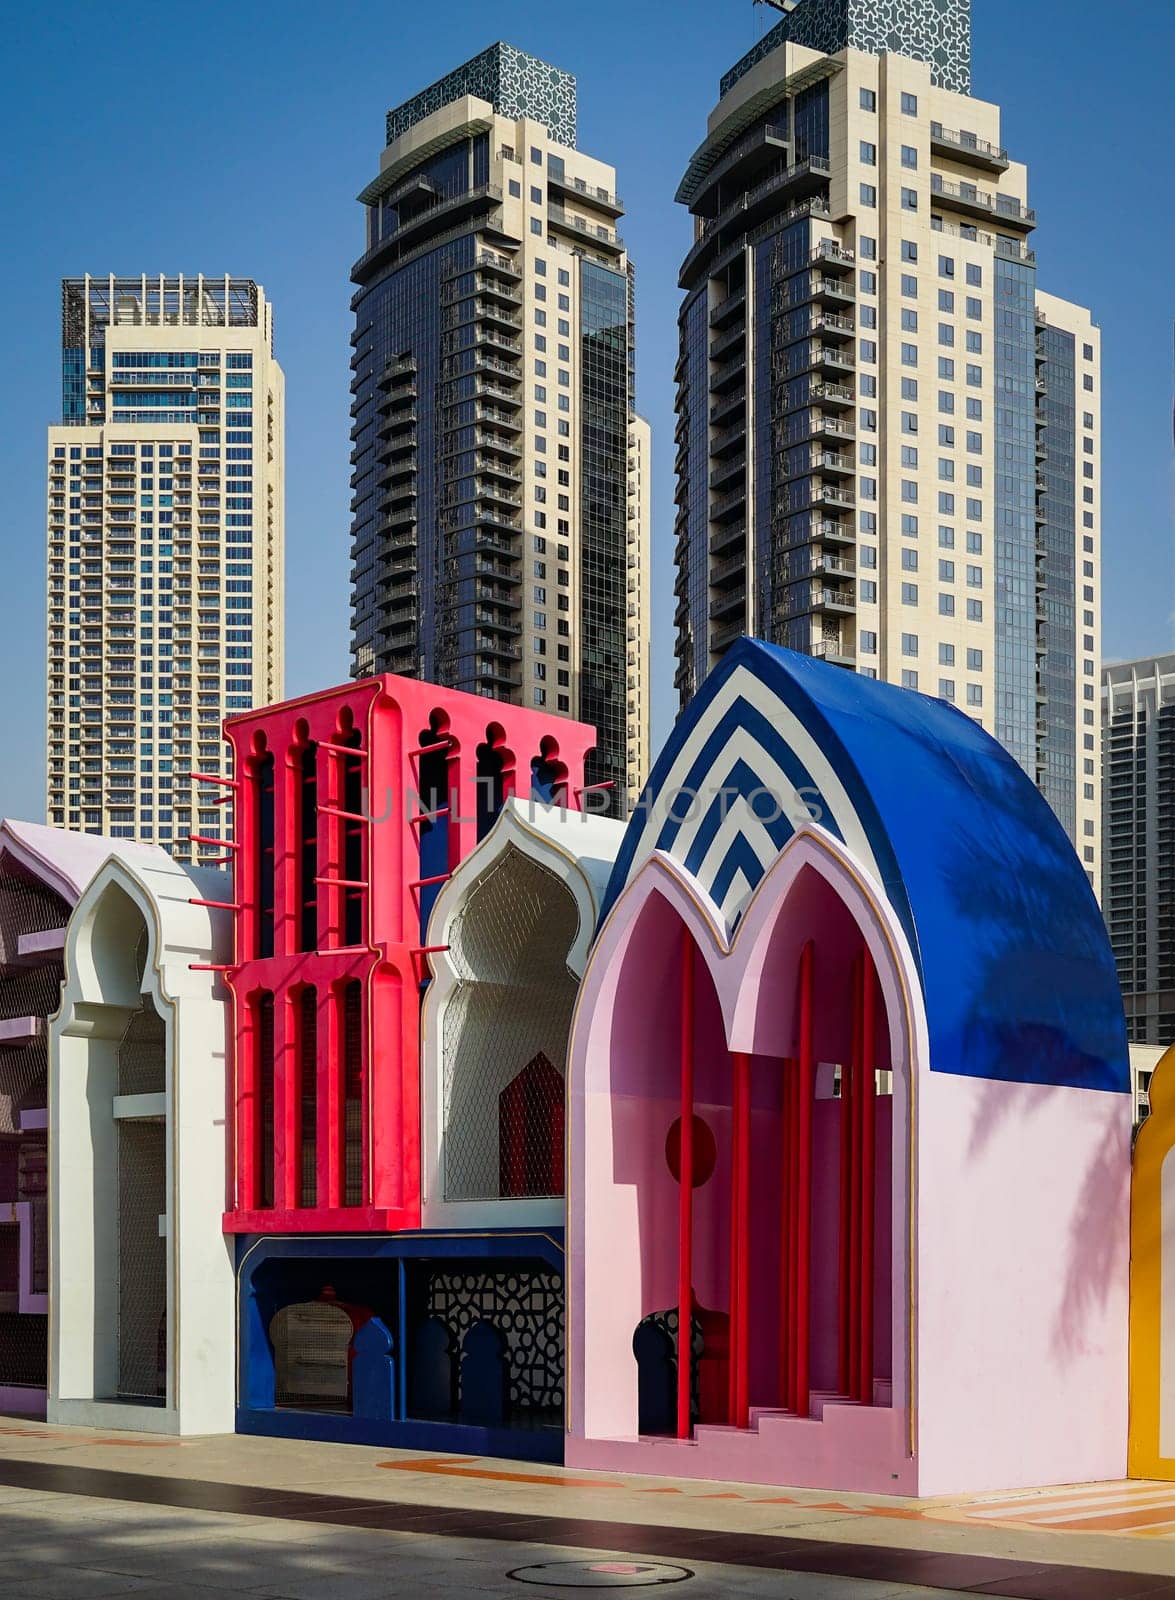 A beautiful and colorful playground depicting the ancient minarets at Dubai Creek Harbour in Ras al Khor, Dubai, United Arab Emirates.